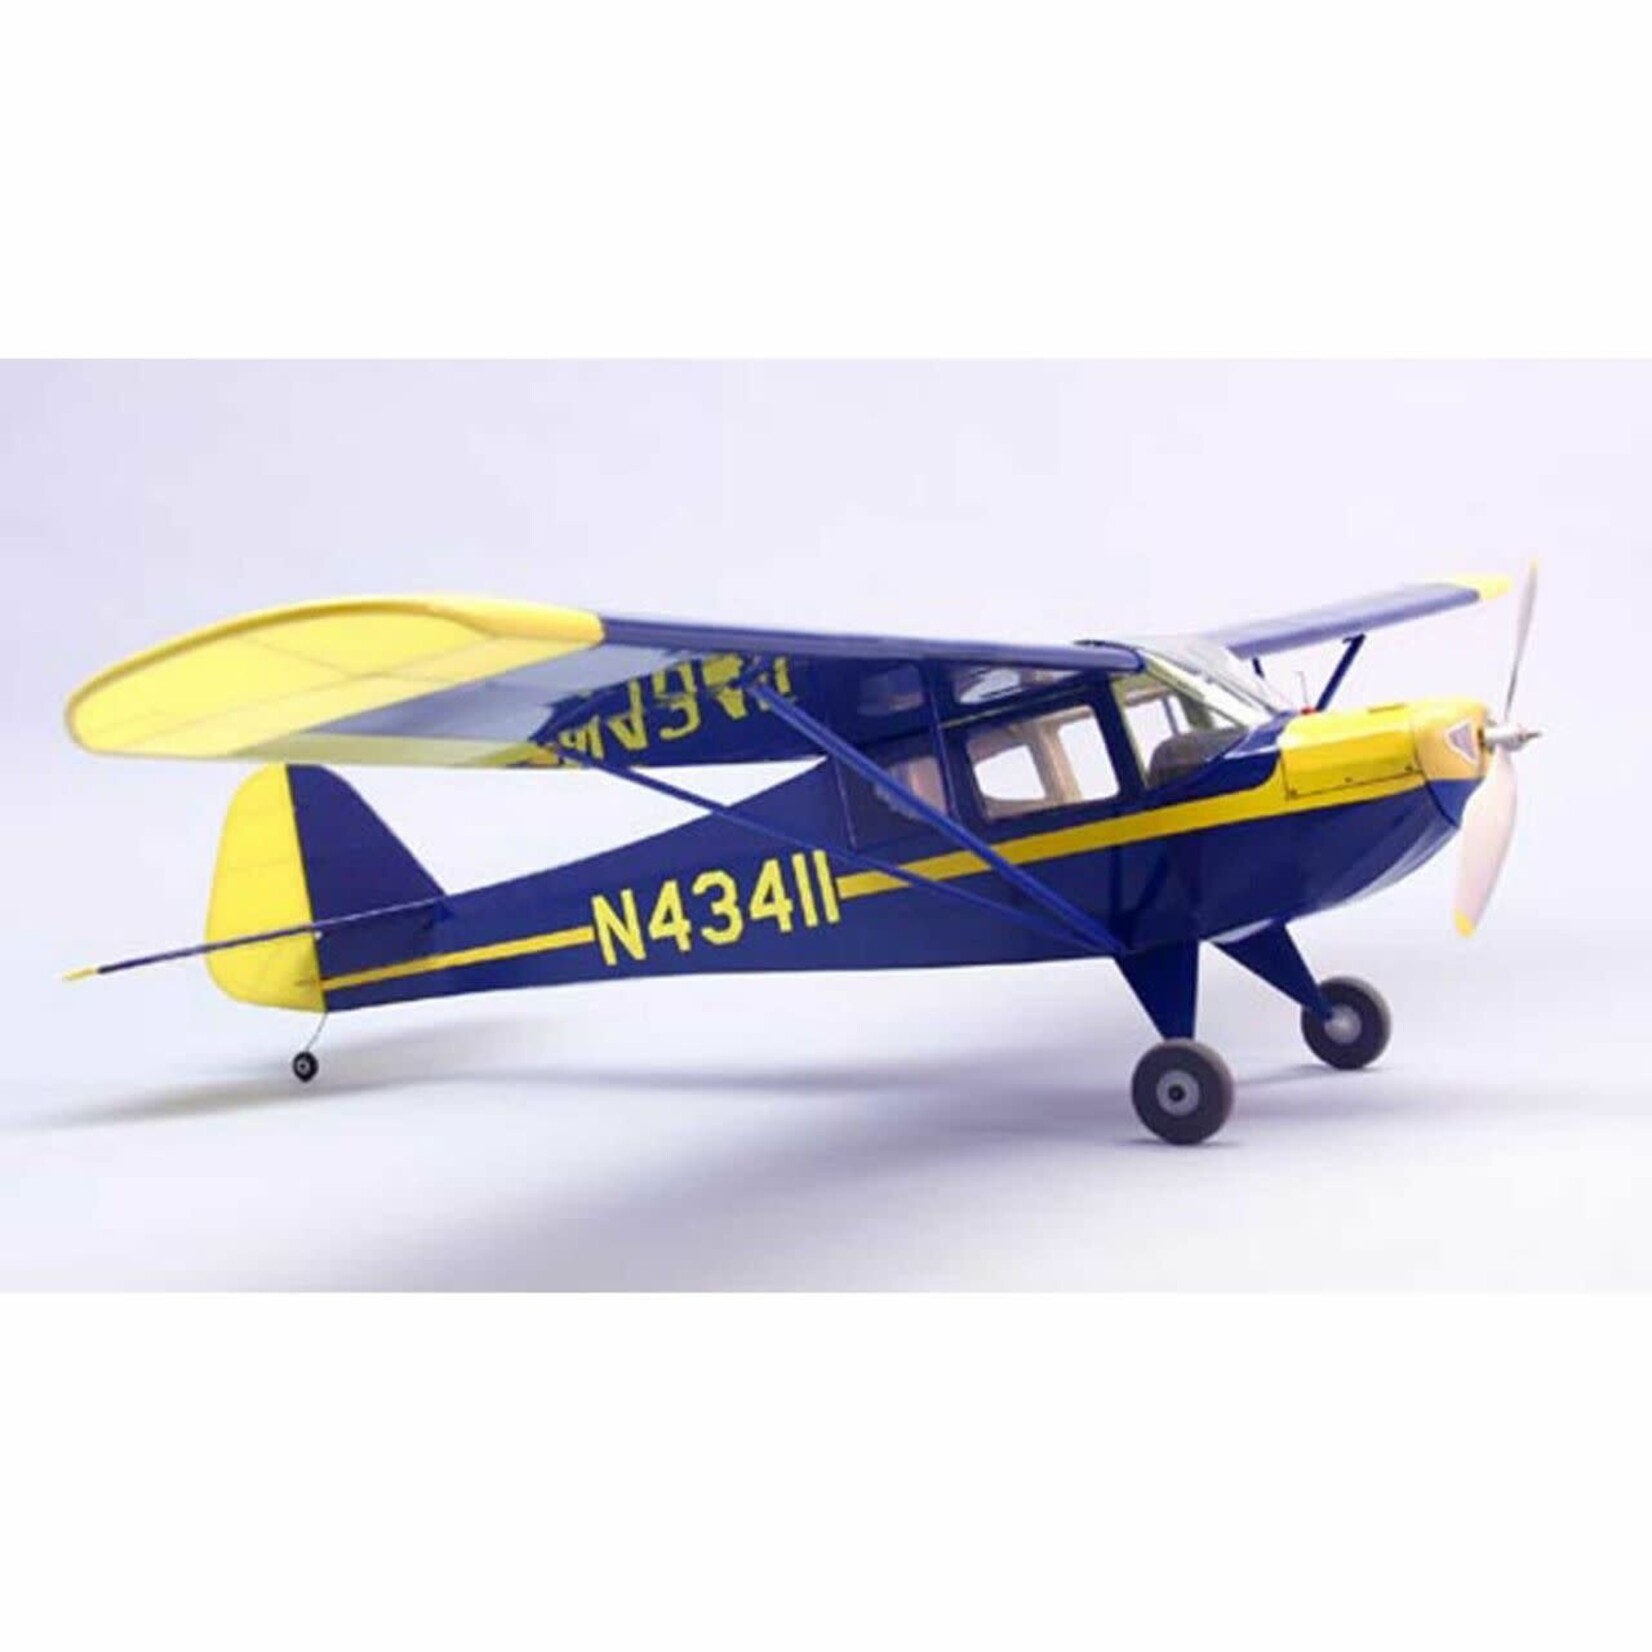 Dumas Taylorcraft Electric Airplane Kit, 40"